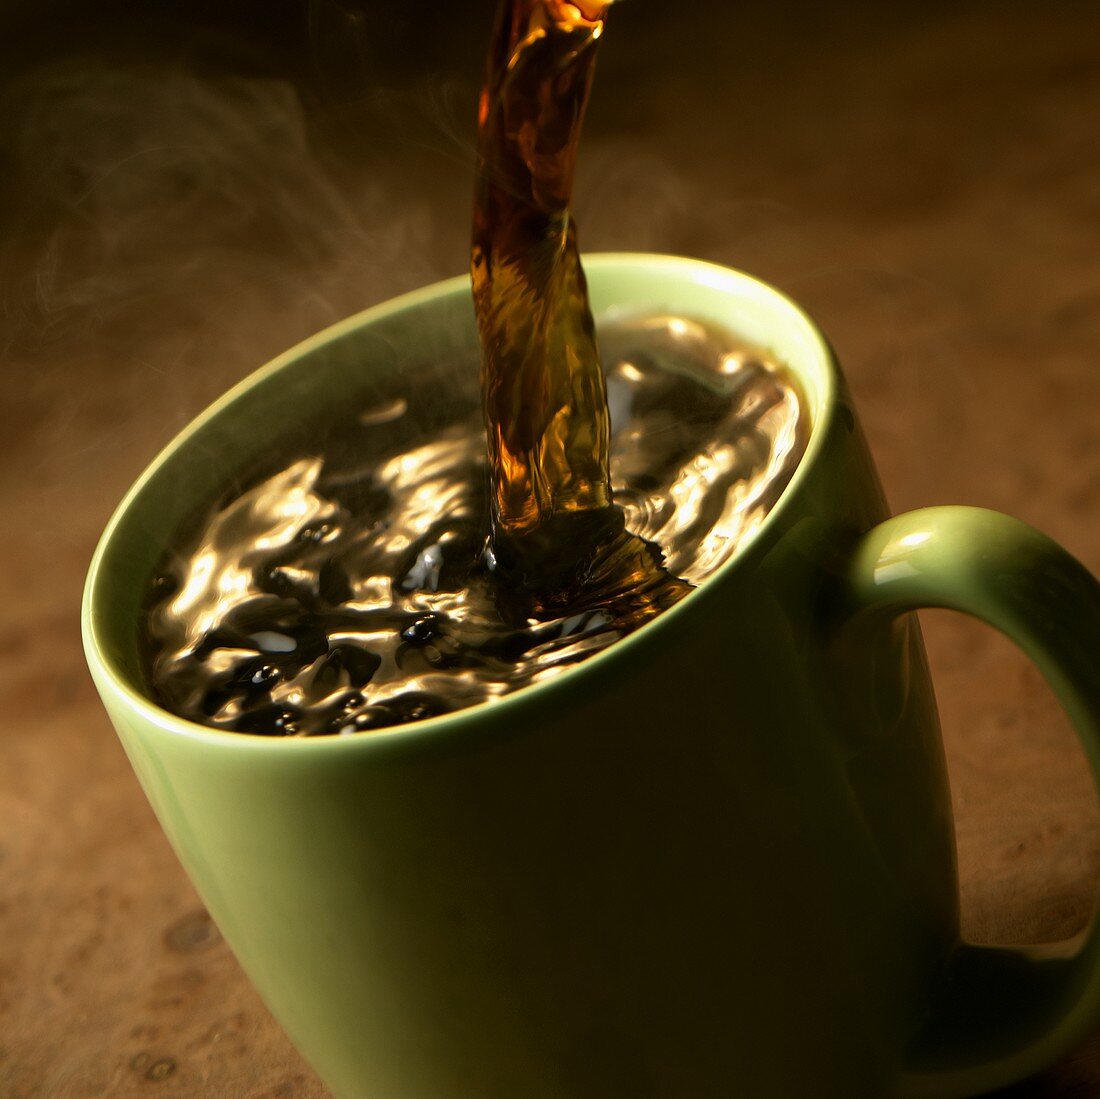 Pouring Coffee into a Mug